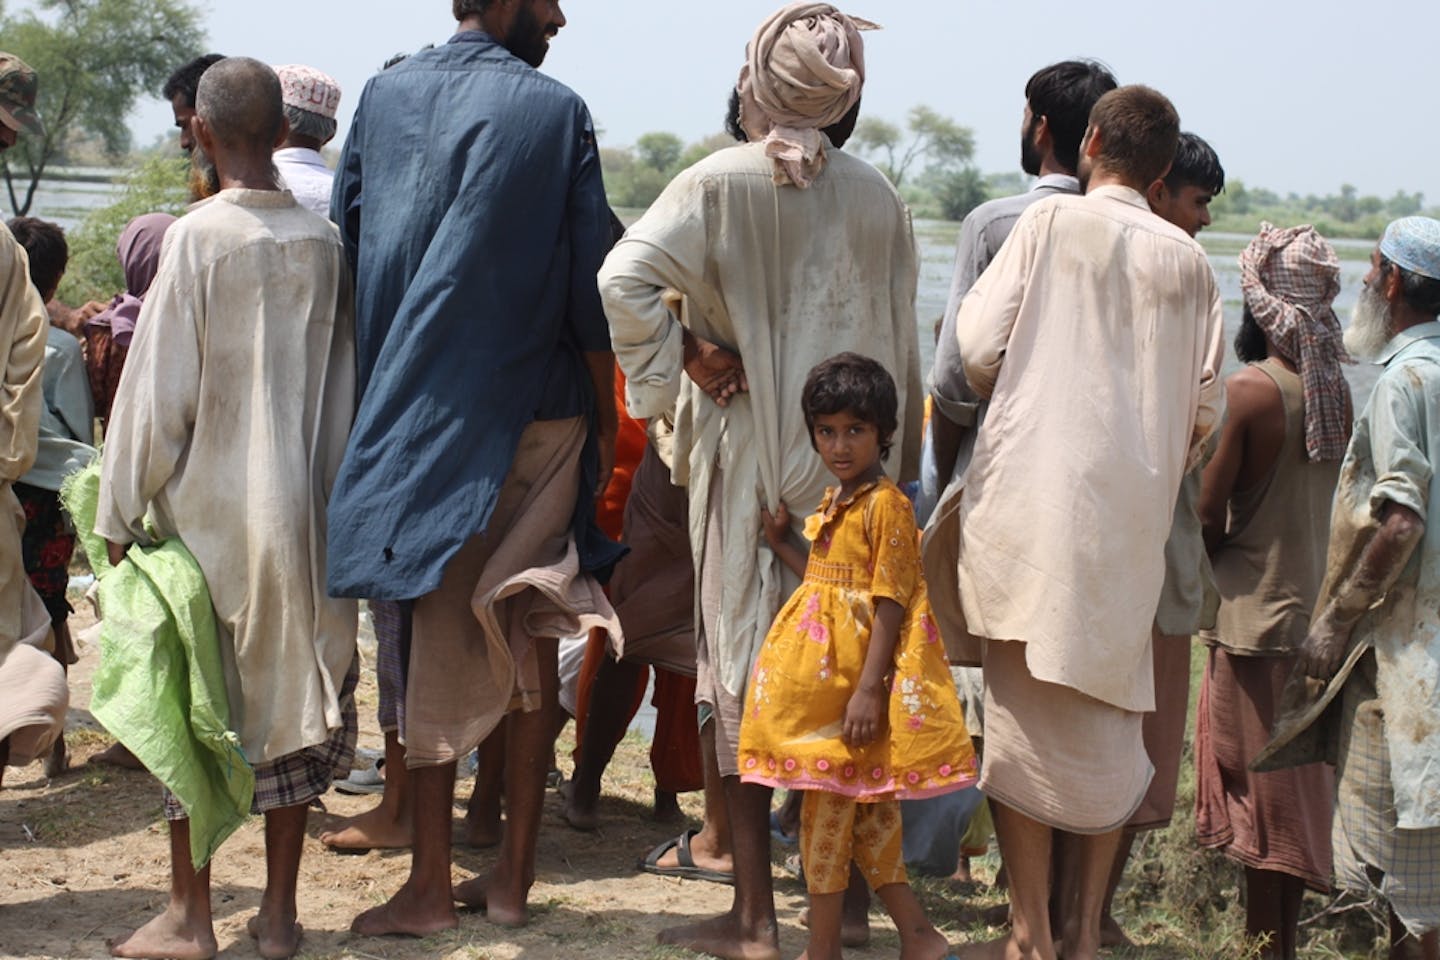 pakistan flood victims